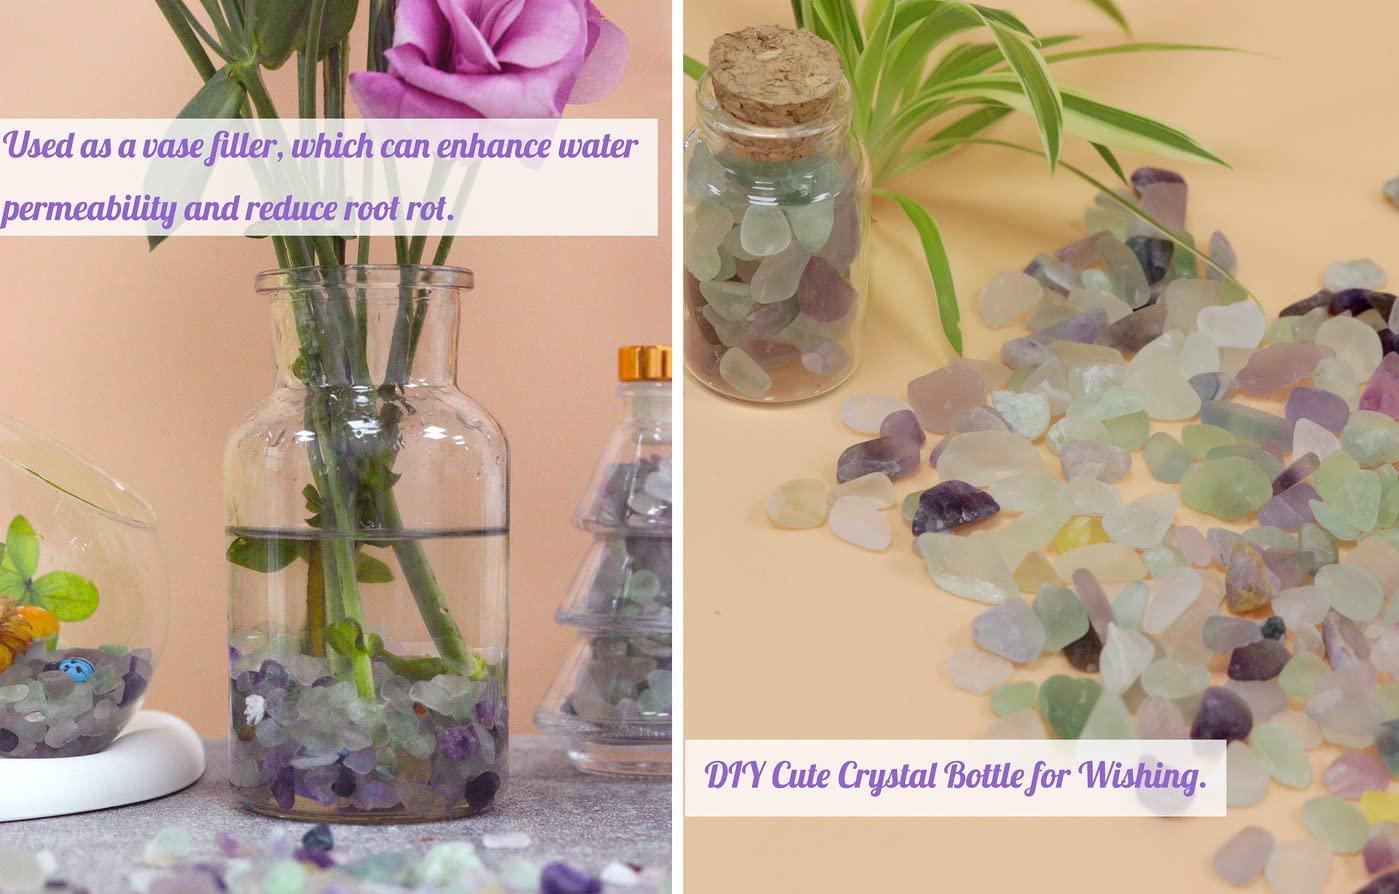 ZHIYUXI 1 lb Fluorite Crystal Chips Bulk Fish Tank Decorations Aquarium  Rocks Gravel Vase Filler Stones Crystals for Candle Making Witch Kit Gravel